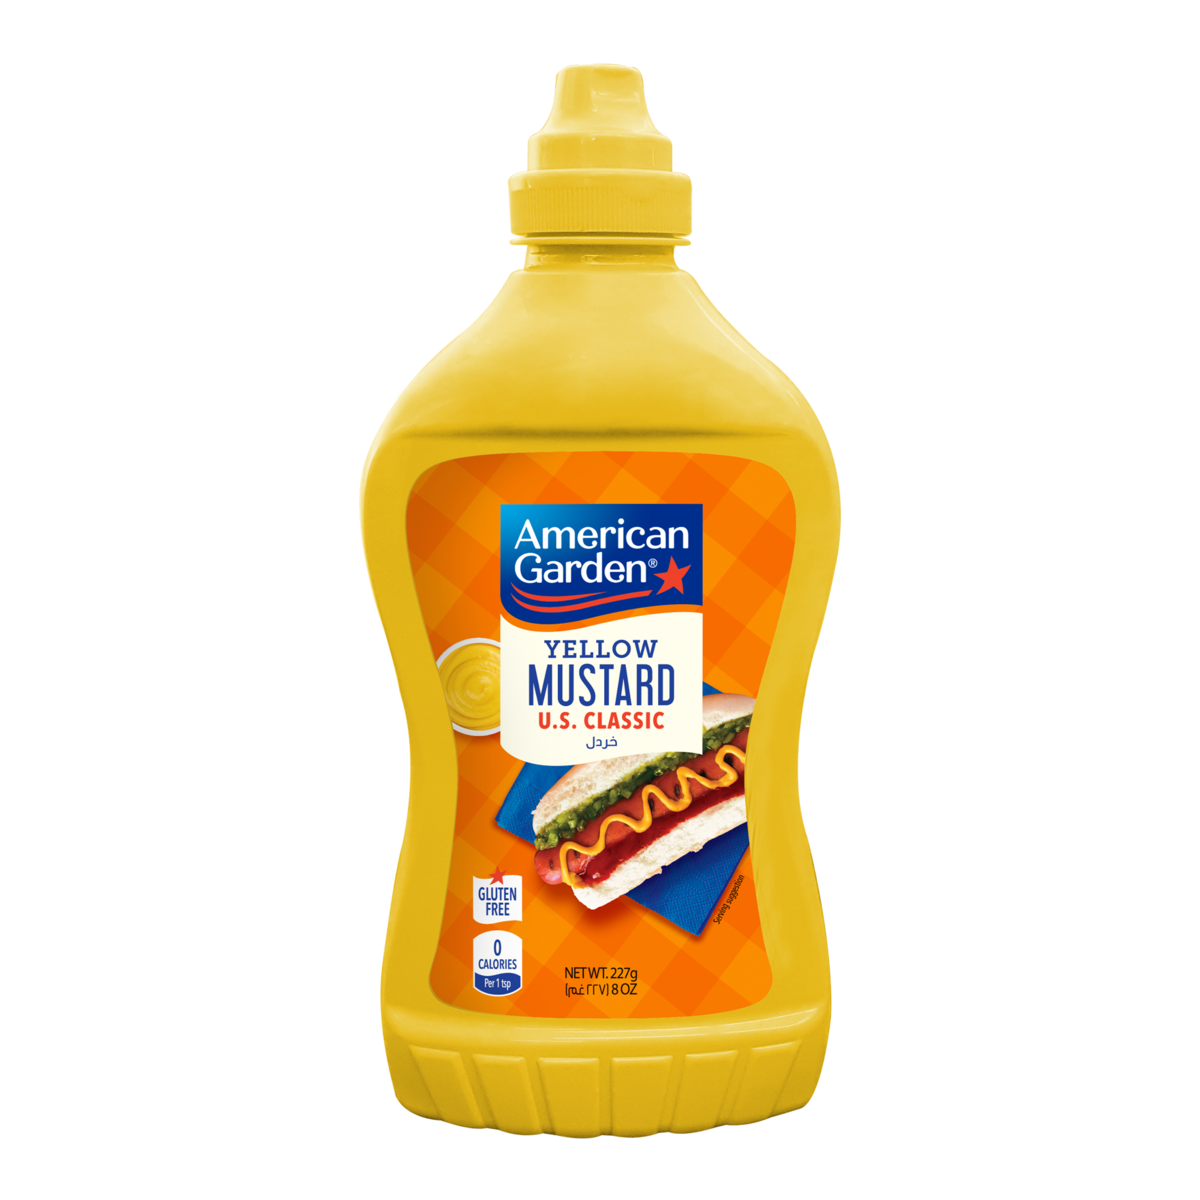 American Garden U.S. Mustard Original 227 g